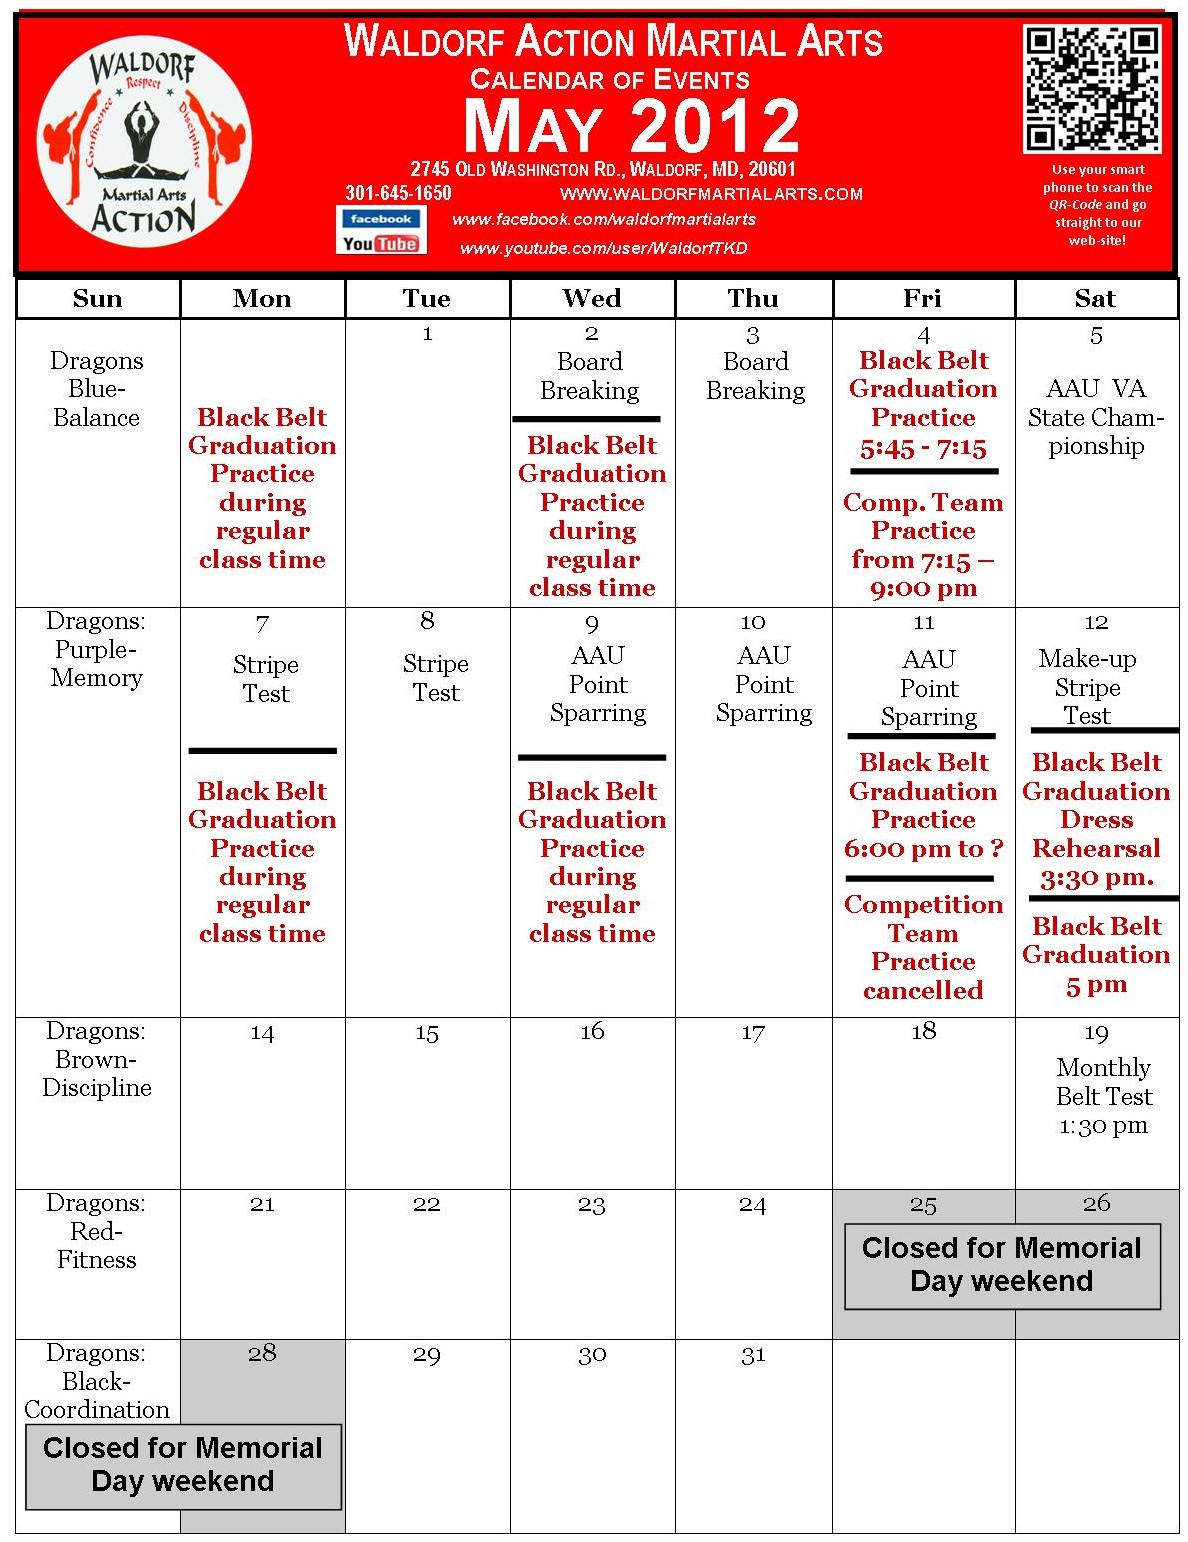 Waldorf Action Martial Arts May 2012 Calendar of Events